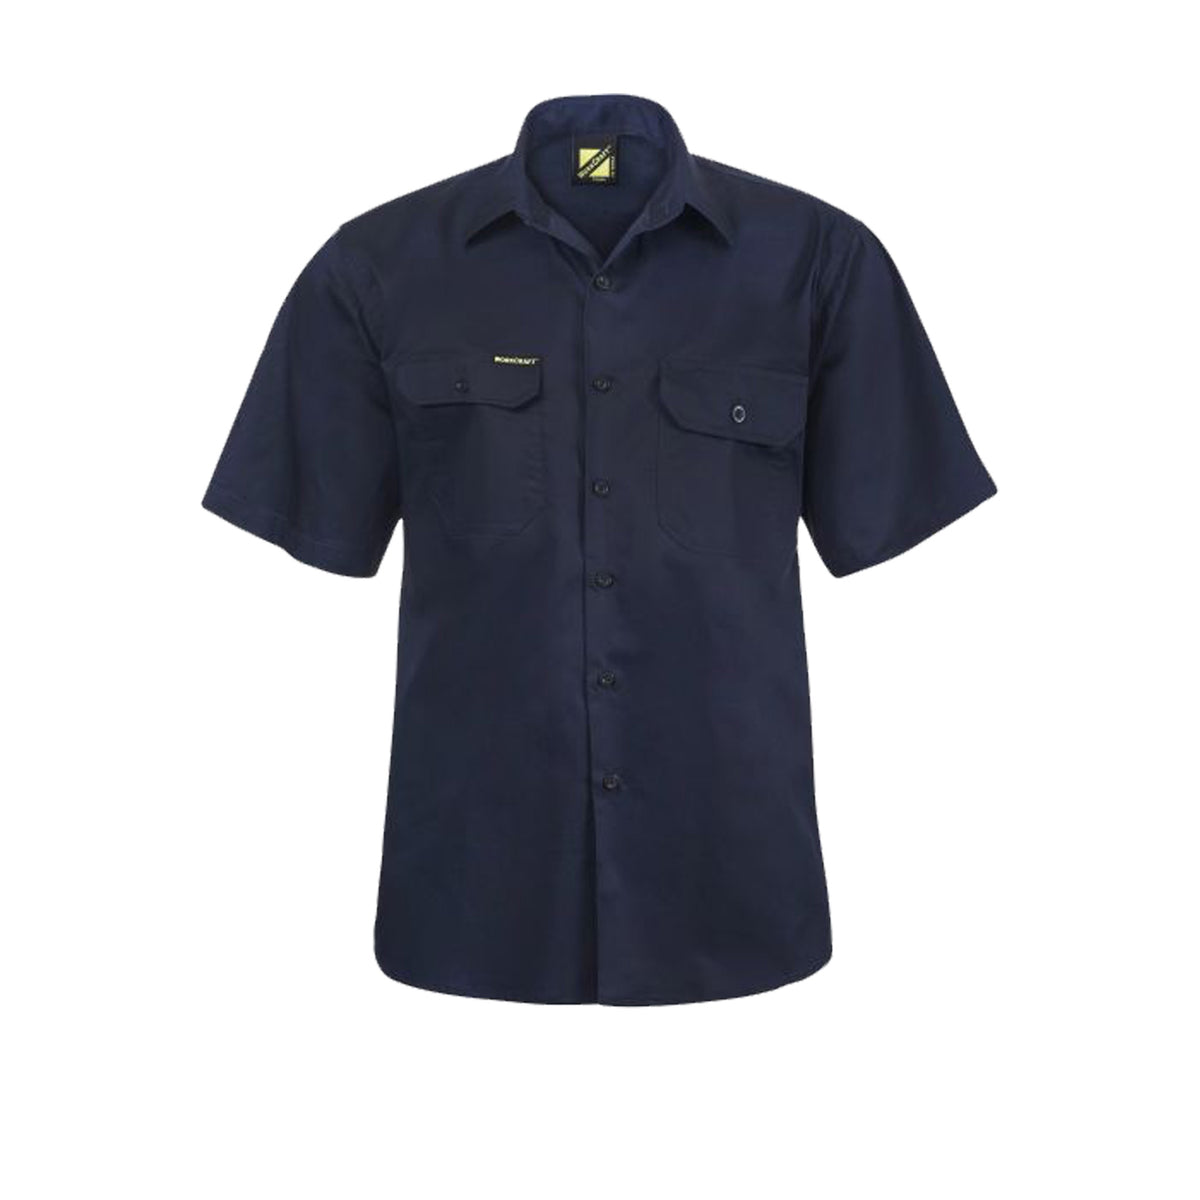 lightweight short sleeve vented cotton drill shirt in navy